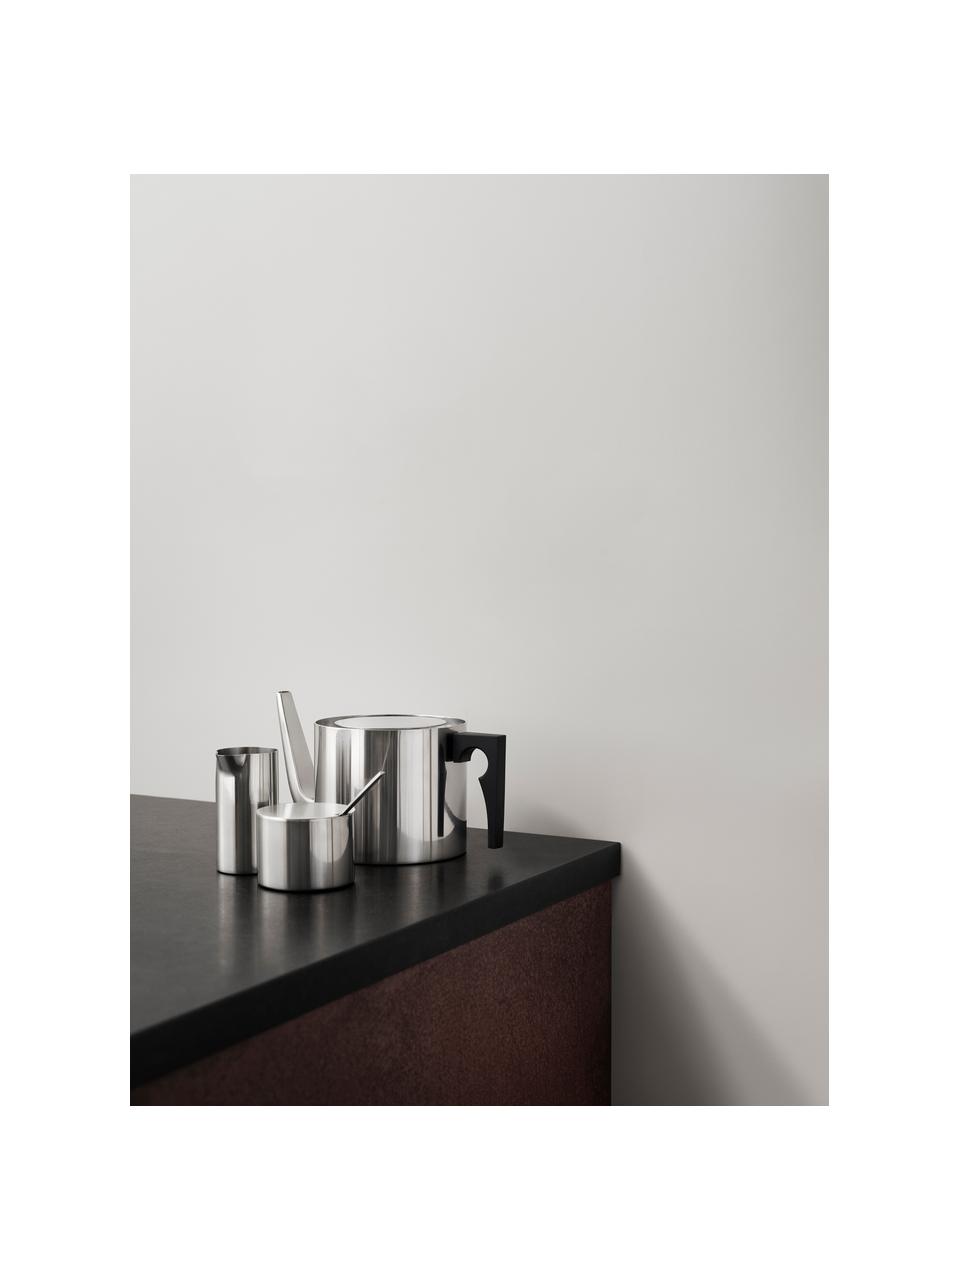 Teekanne Arne Jacobsen, 1.25 L, Korpus: Edelstahl, Griff: Kunststoff, Silberfarben, 1.25 L